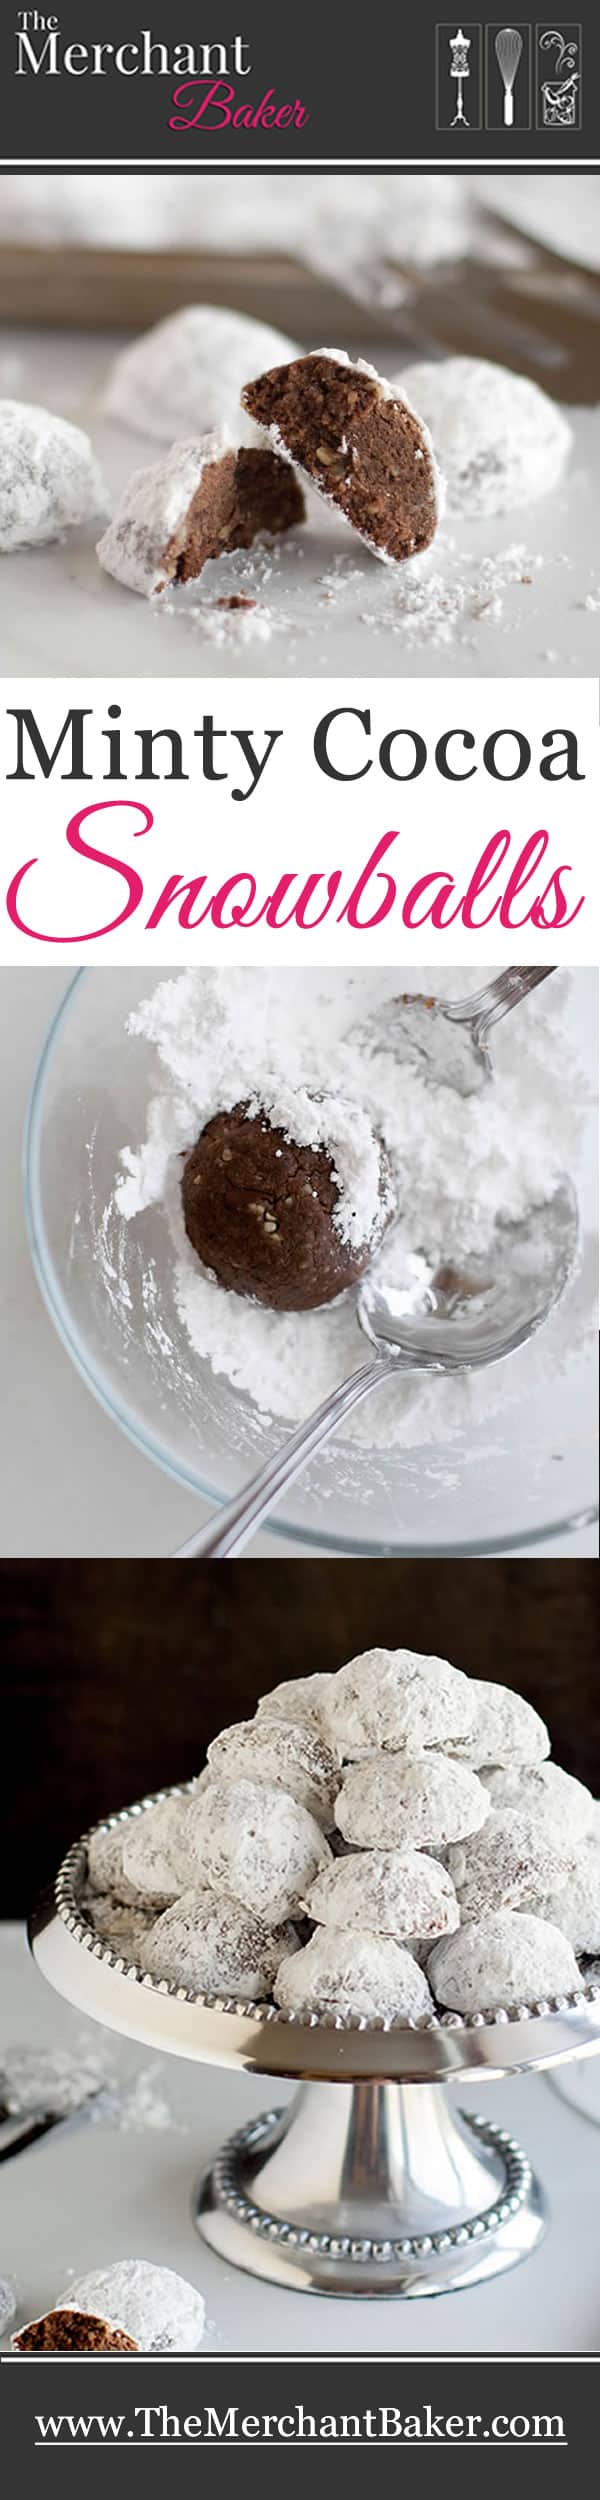 Minty Cocoa Snowballs